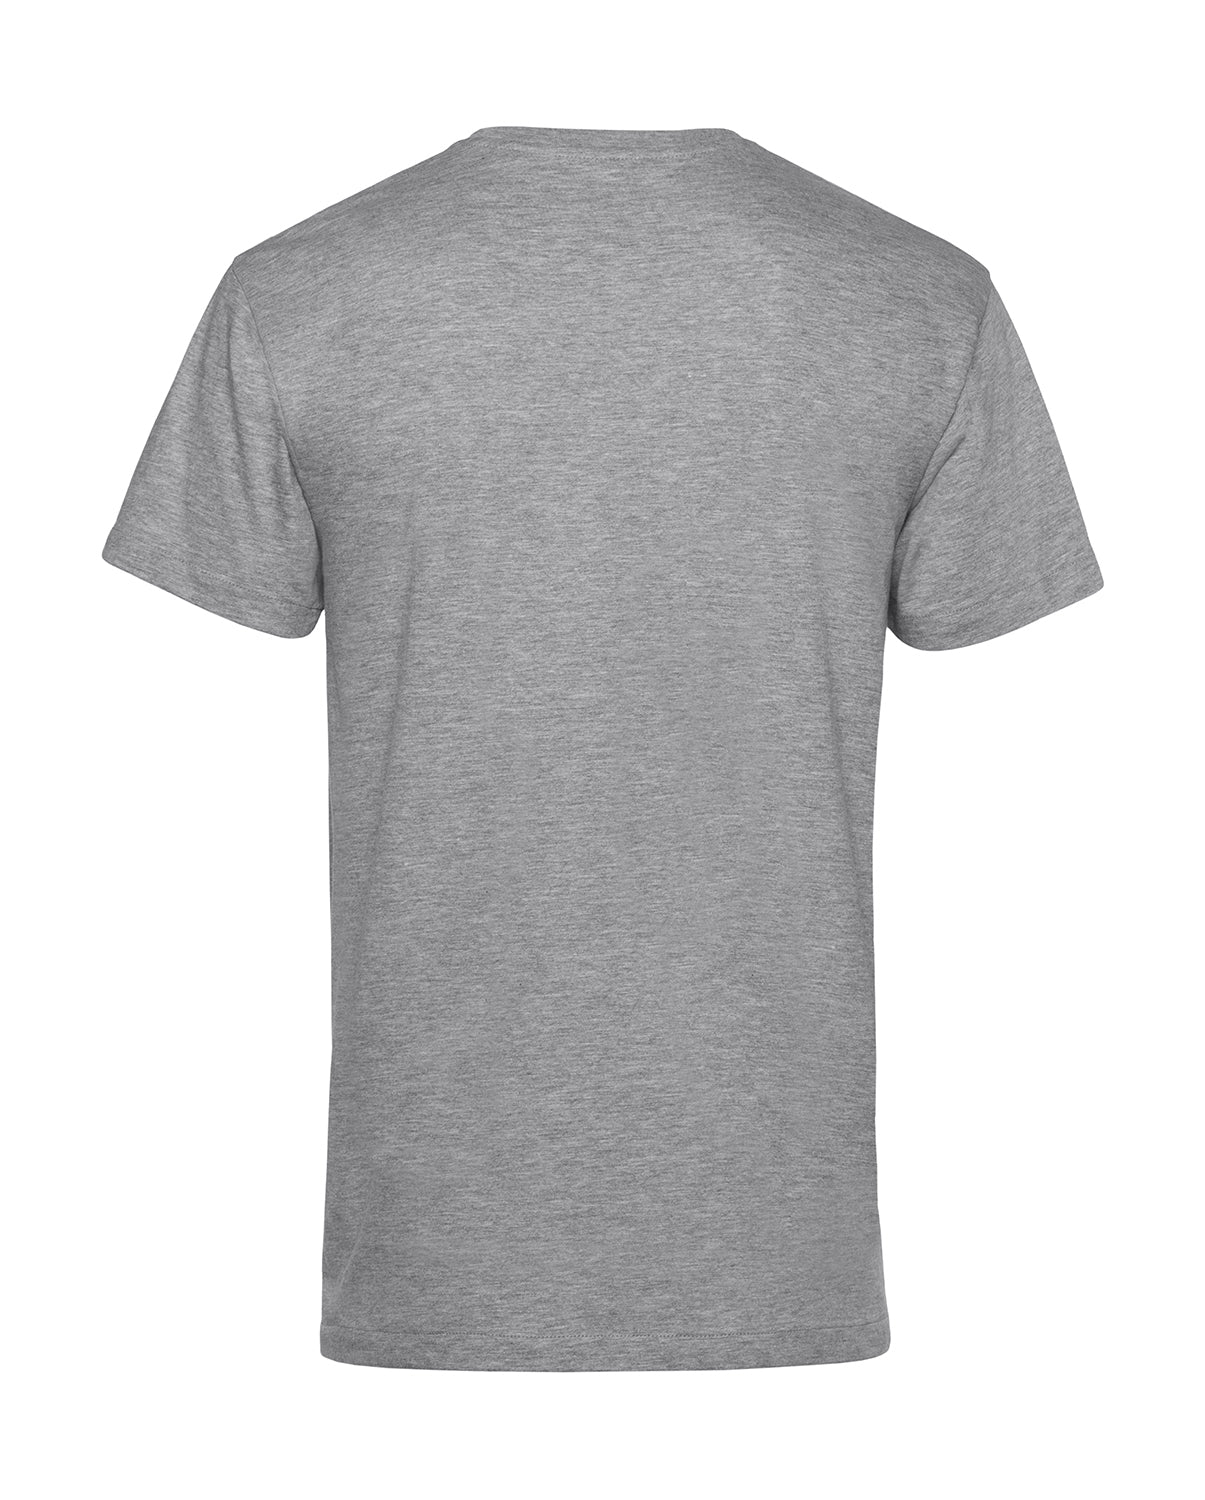 Männer | T-Shirt | Mir sinn die ausm Wald | grau | Logo anthrazit